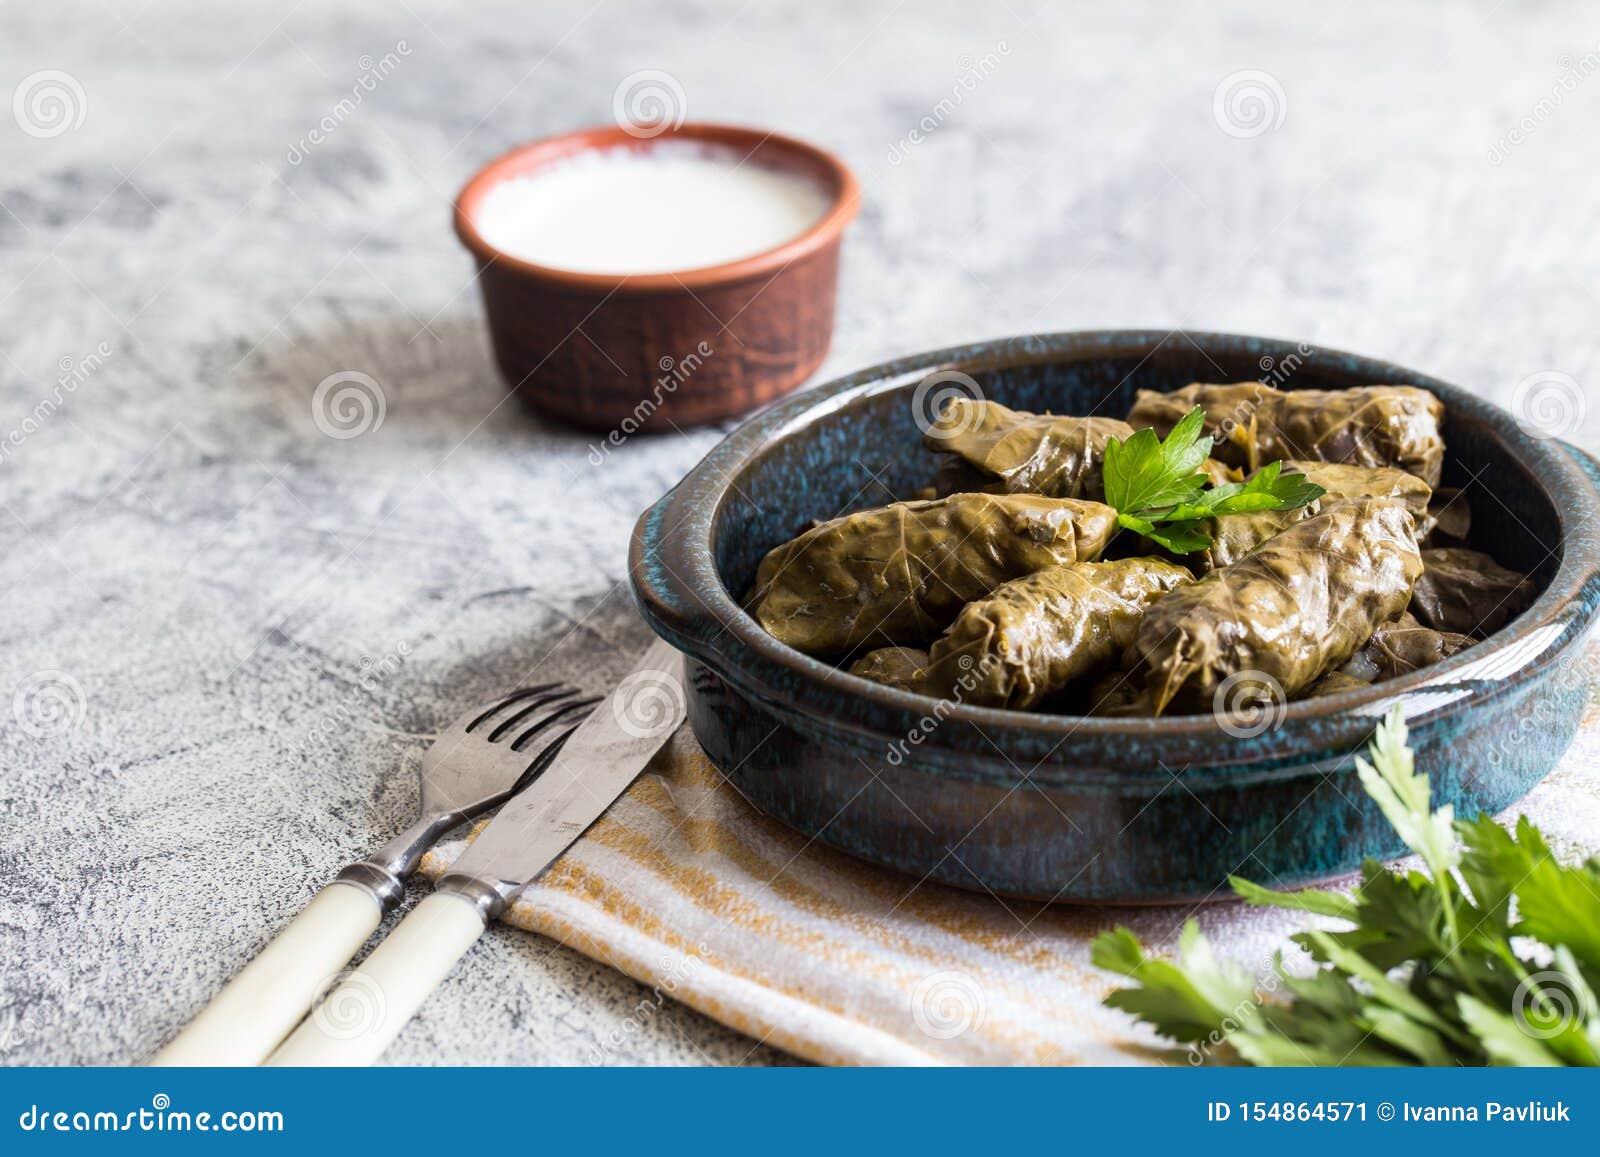 traditional dolma  sarma in grape leaves with copyspace. lebanon turkish greek middle eastern cuisine. dinner food dolmadakia